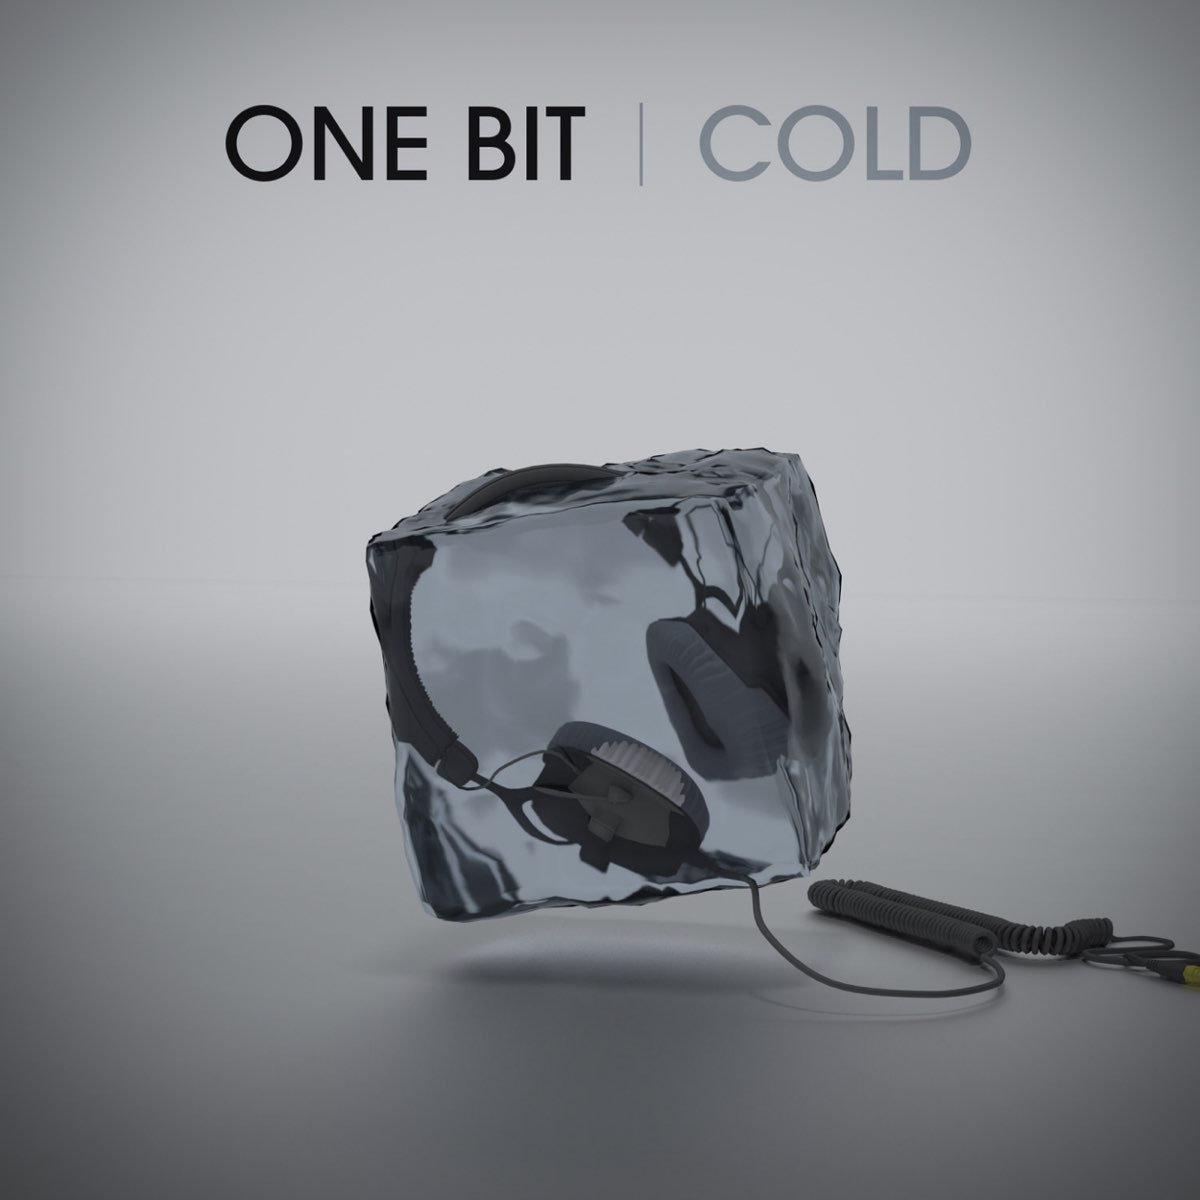 Cold music. One bit. Cold Loner Tape. Cold Culture - Cold (Single). Картинка холод 1bit.